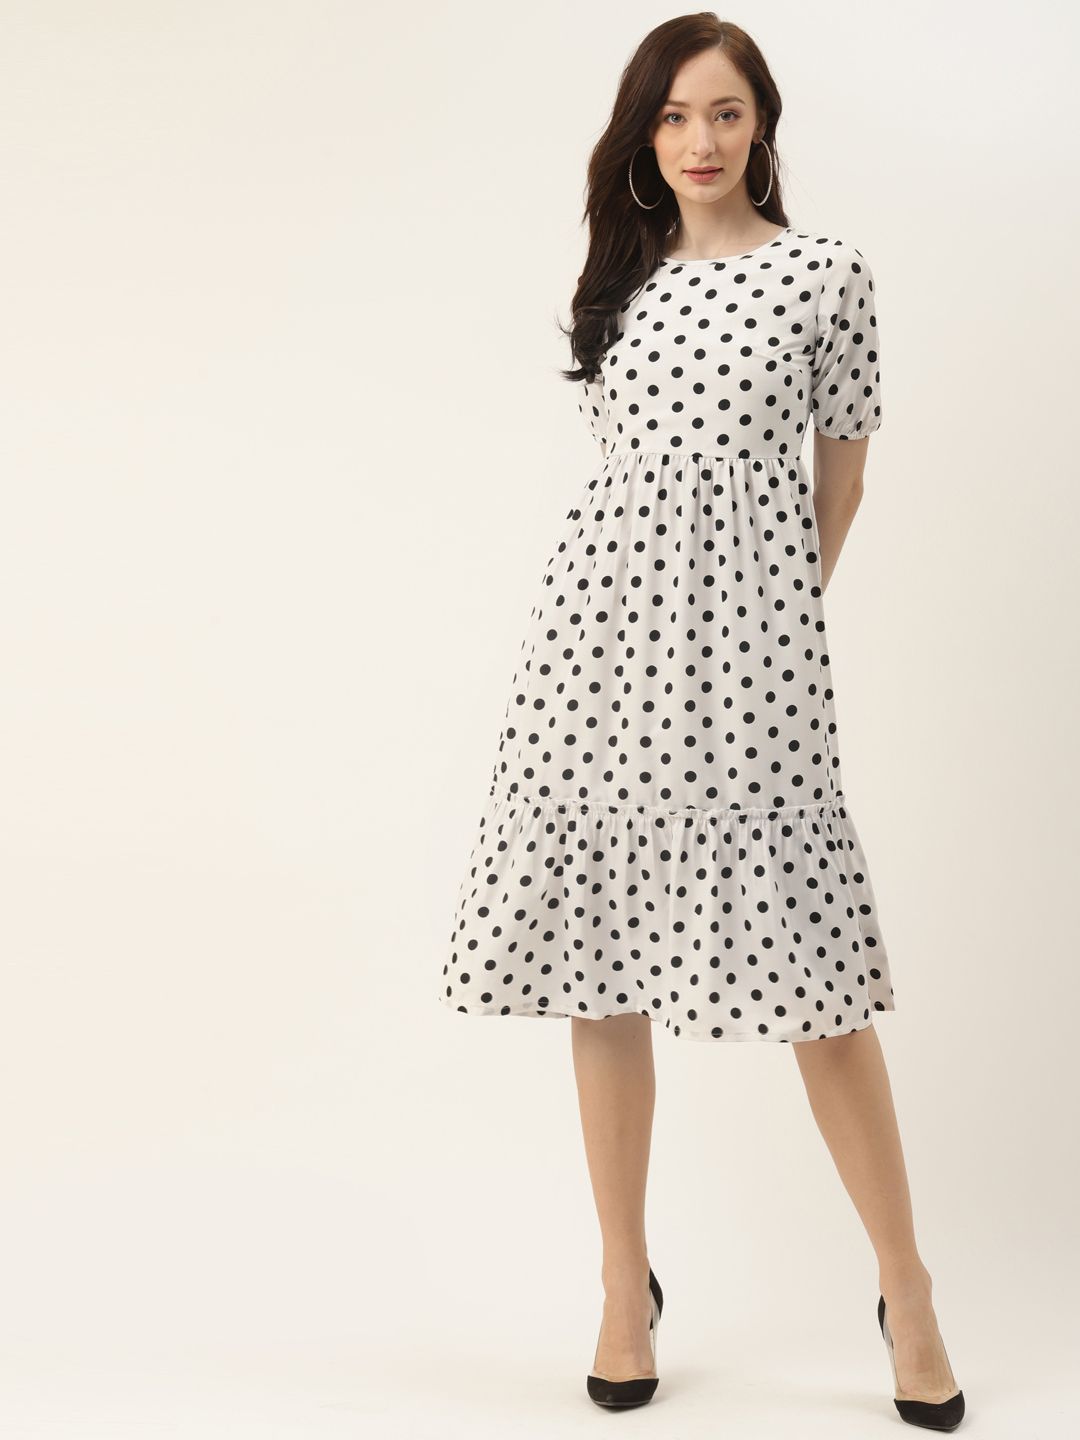 BRINNS White & Black Polka Dots Printed Crepe Dress Price in India